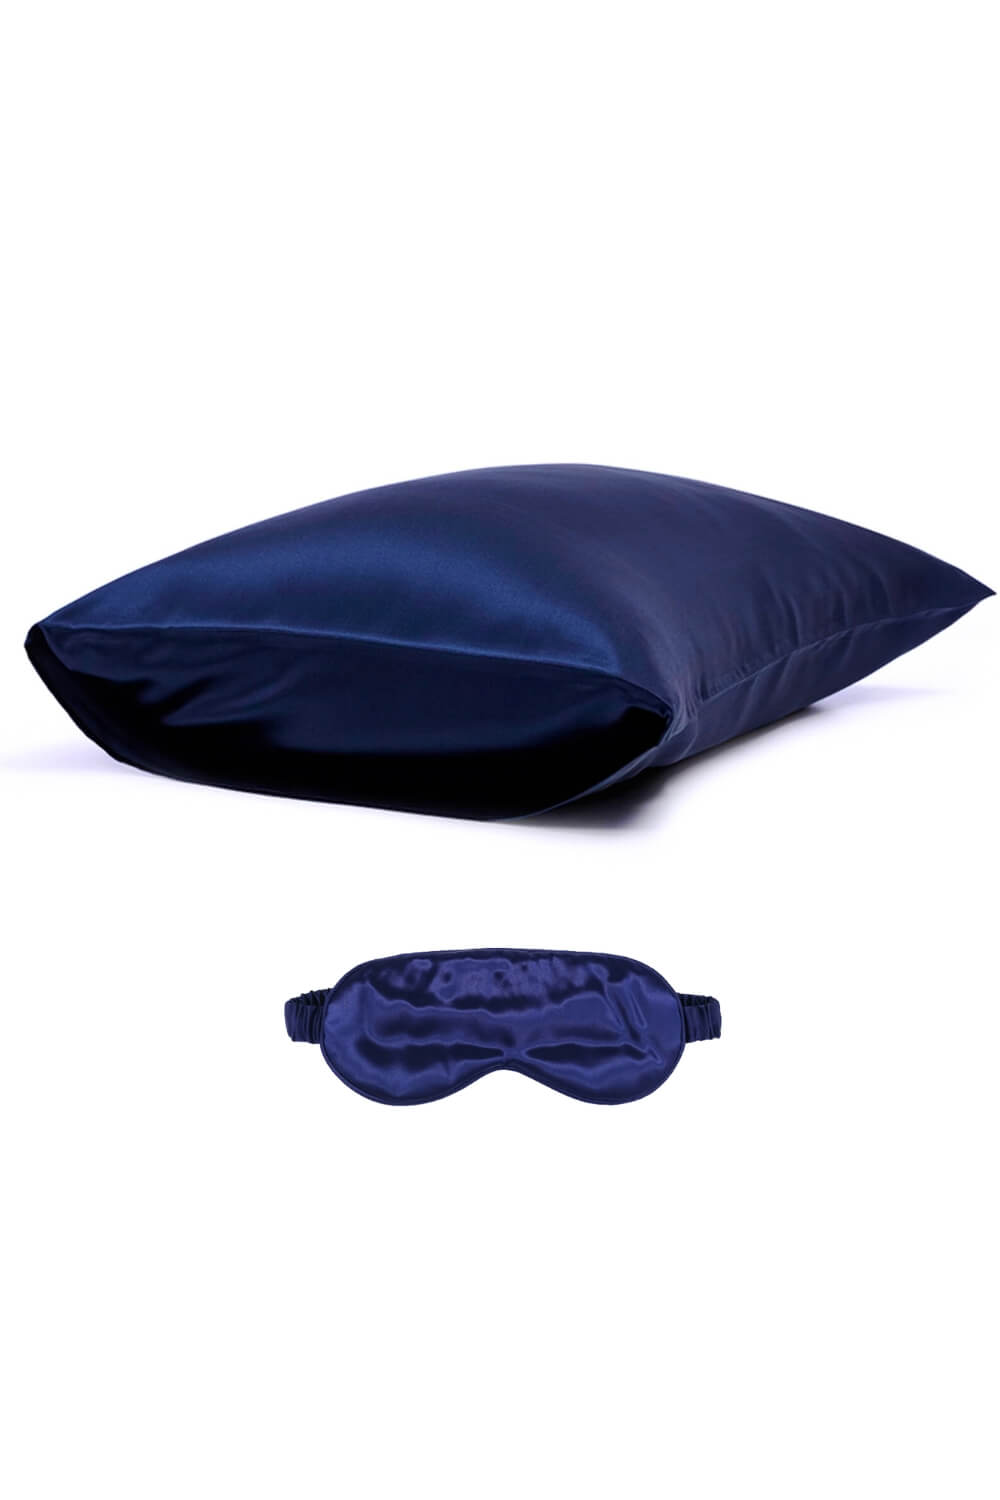 Silk Pillowcase and Silk Eye Mask Gift Set - Navy Blue - BASK™